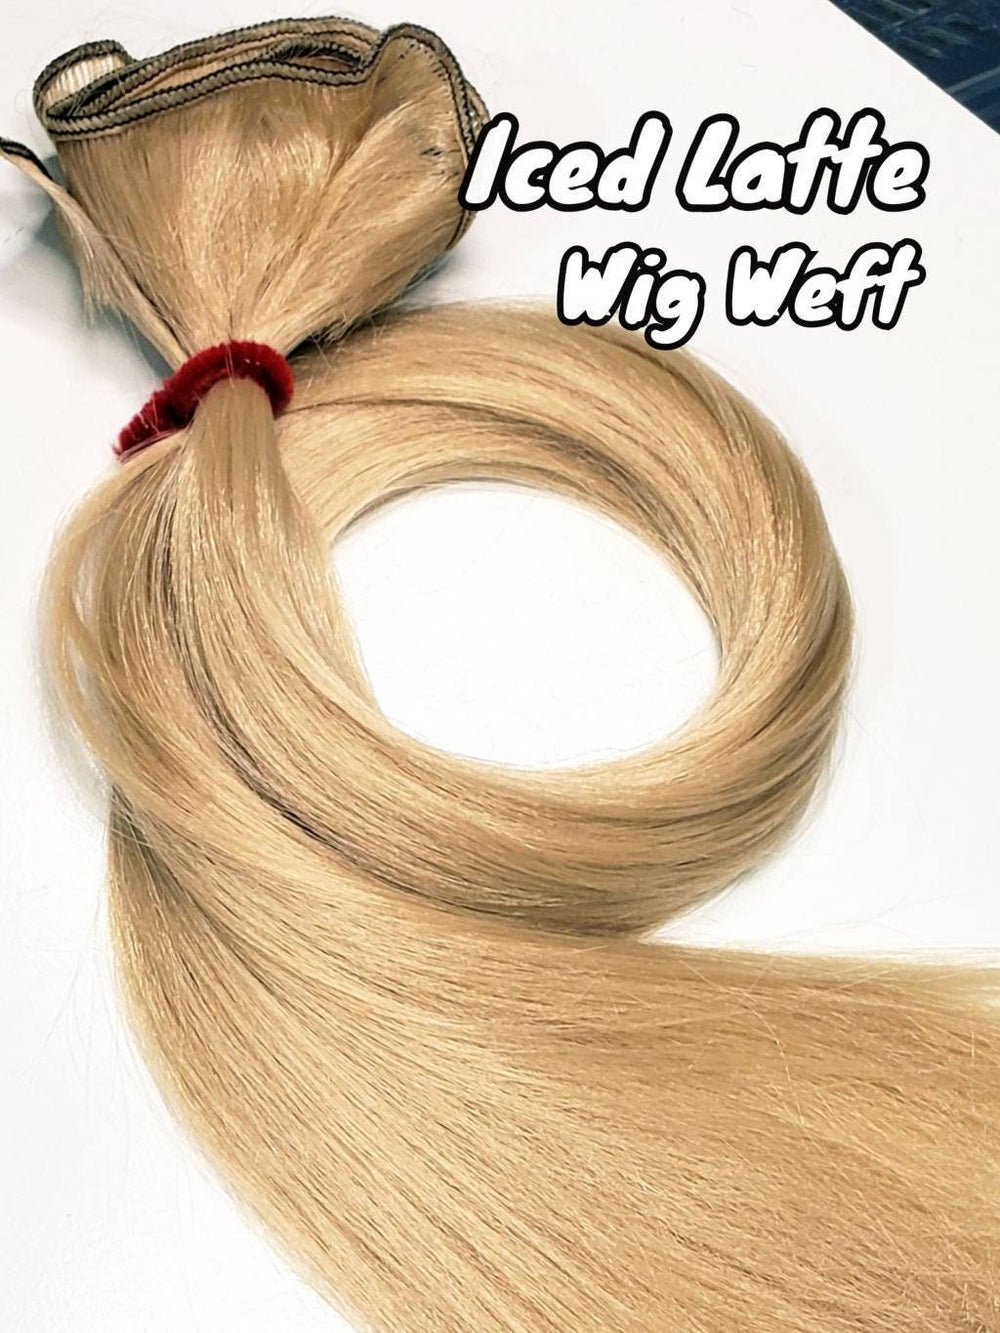 DG-HQ™ Wig Weft Nylon Iced Latte N2712A light Golden brown dark blonde Nylon Weft 30"Wx20"L Doll Hair for Making Fashion Doll Wigs